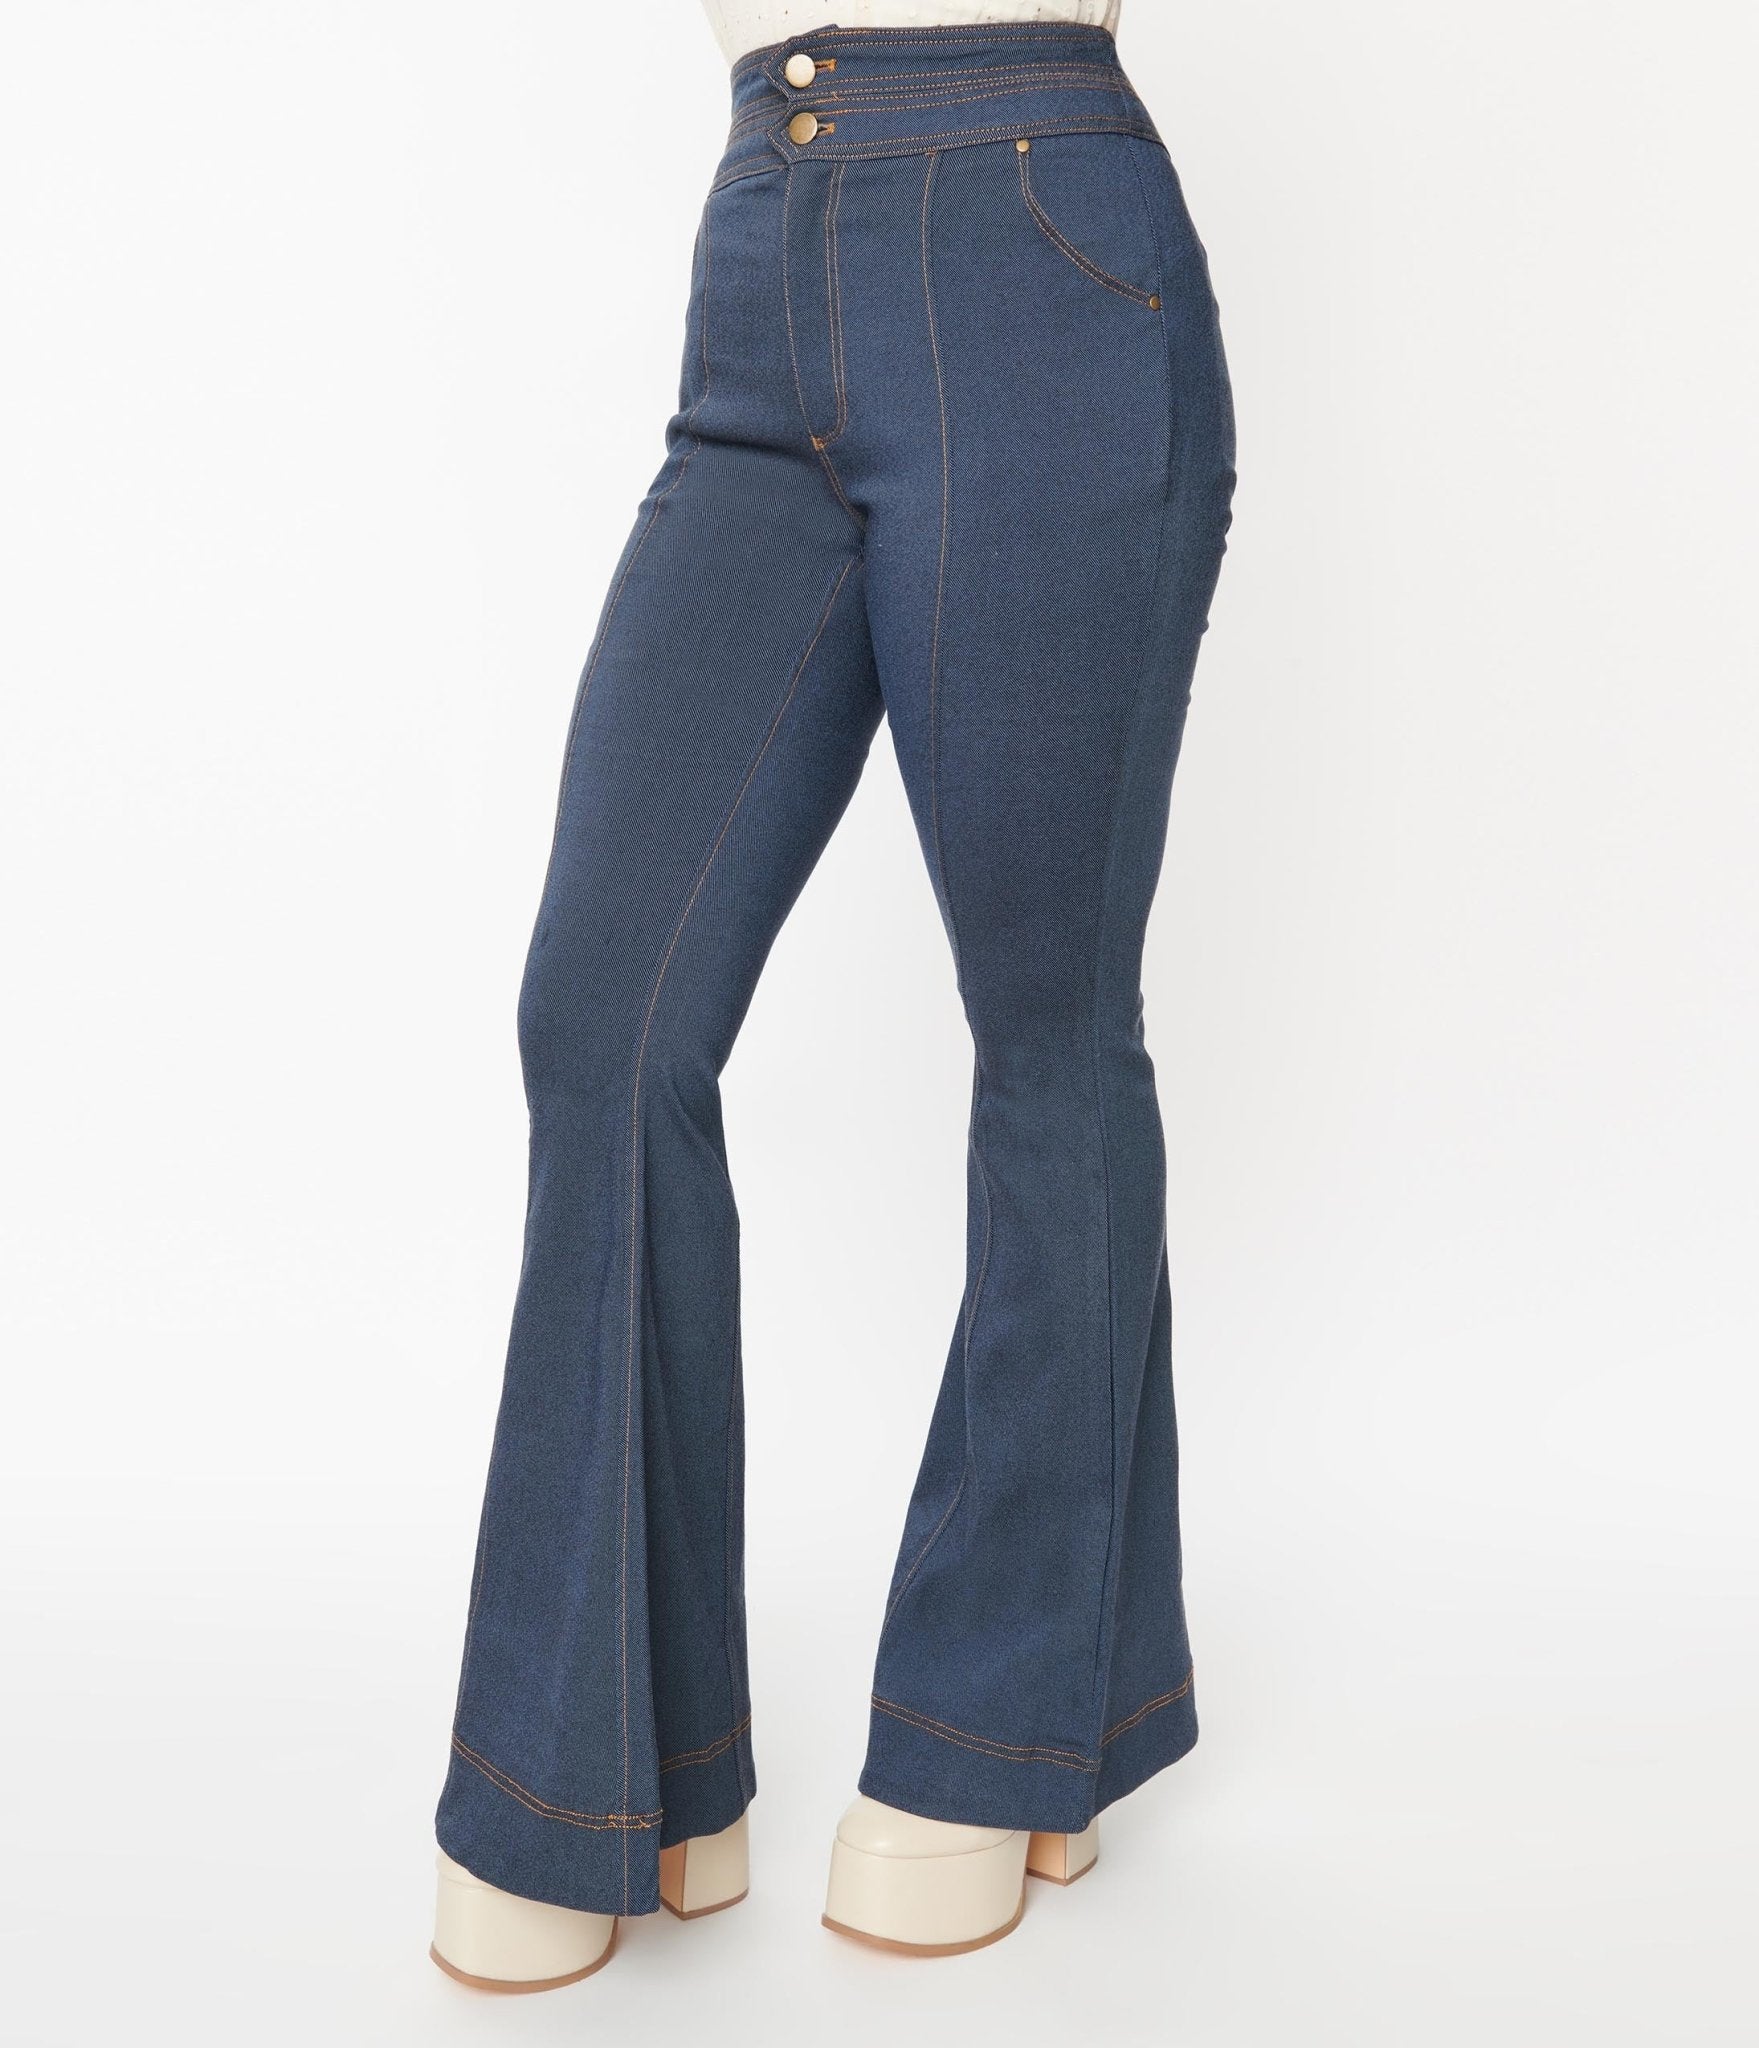 Retro & Vintage Unique Vintage Denim High Waisted Bell Bottom Jeans